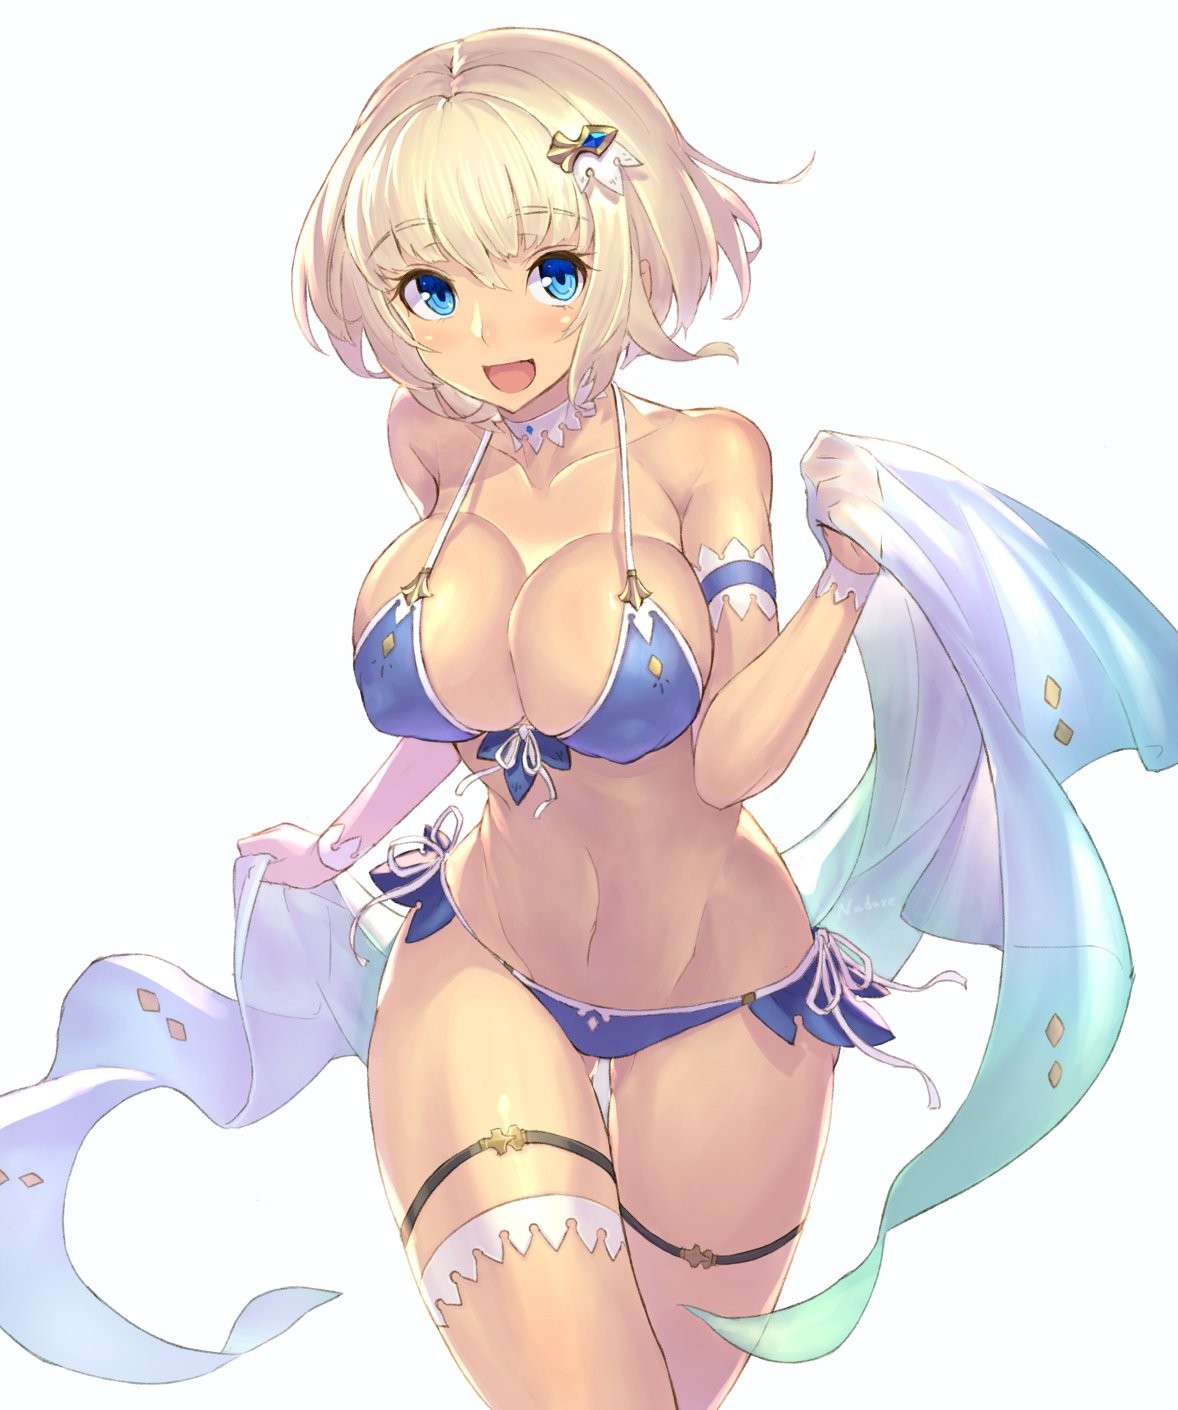 Anime 1178x1410 bikini cleavage white background boobs big boobs nipple bulge short hair blonde blue eyes anime girls artwork Nadare-san